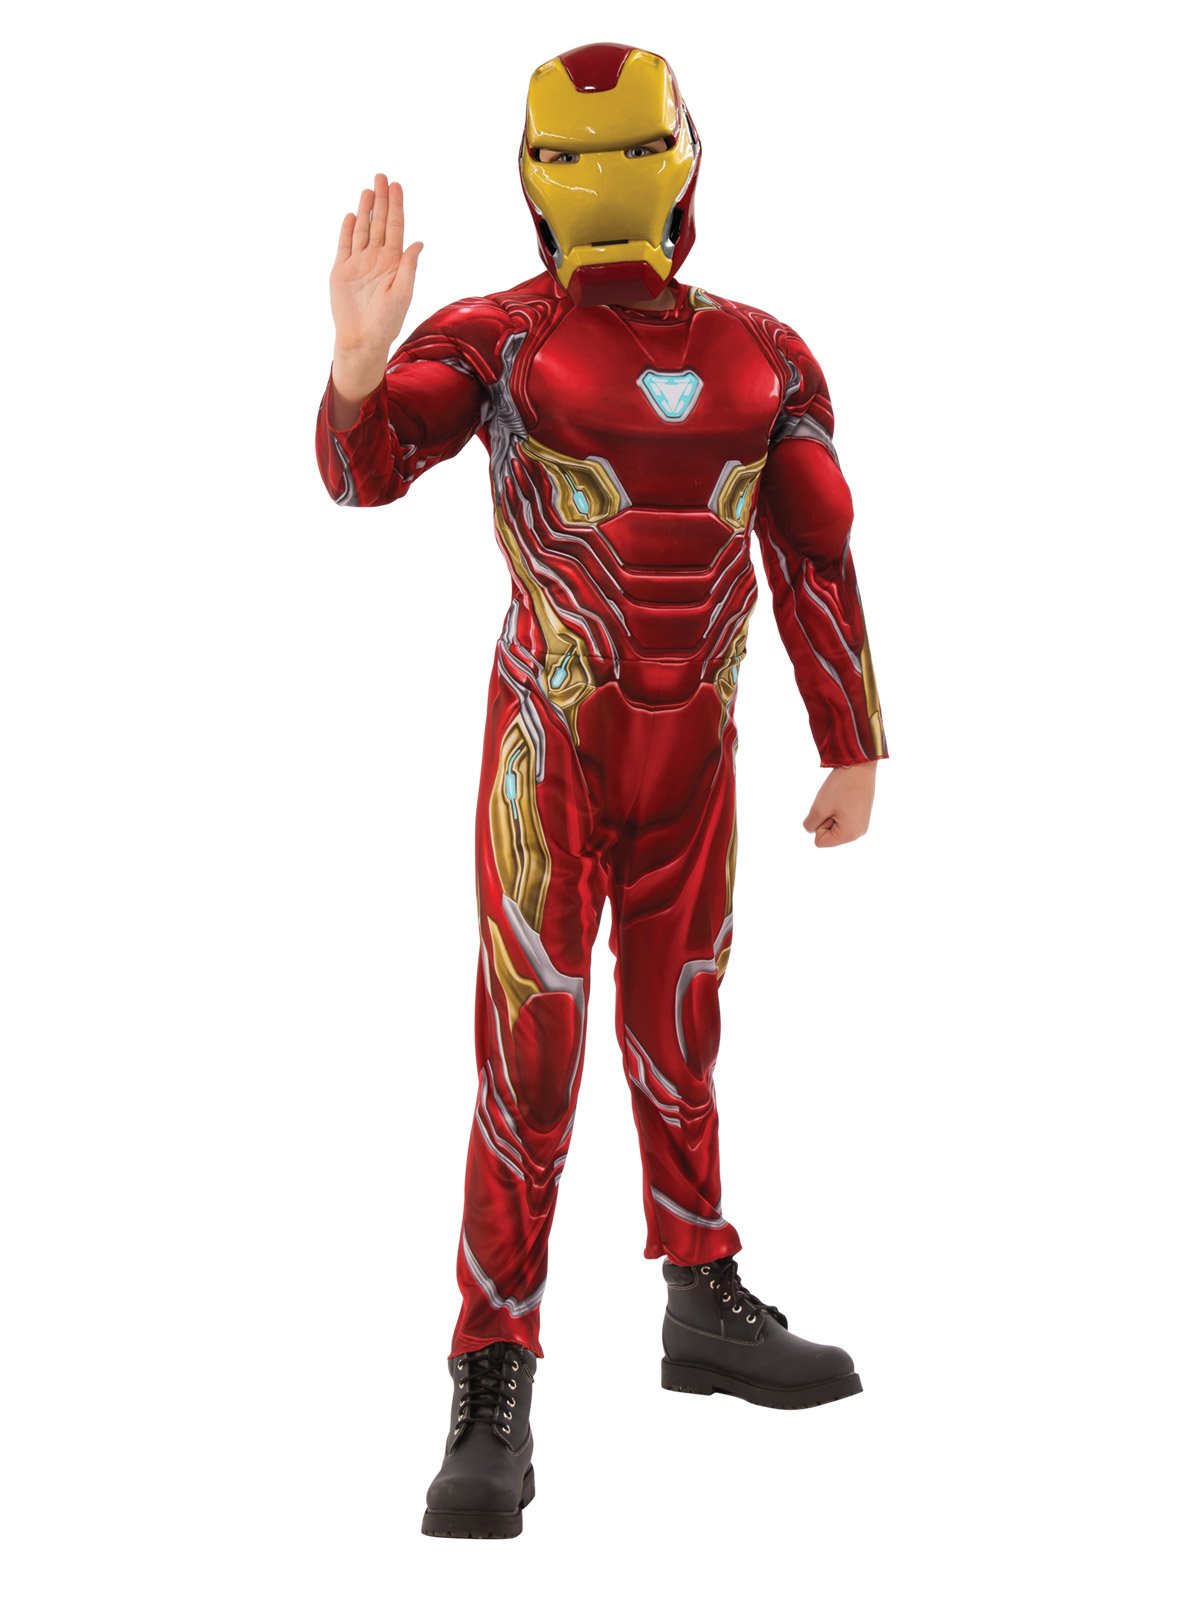 Iron Man Deluxe Costume for Kids - Marvel Iron Man | Costume Super Centre